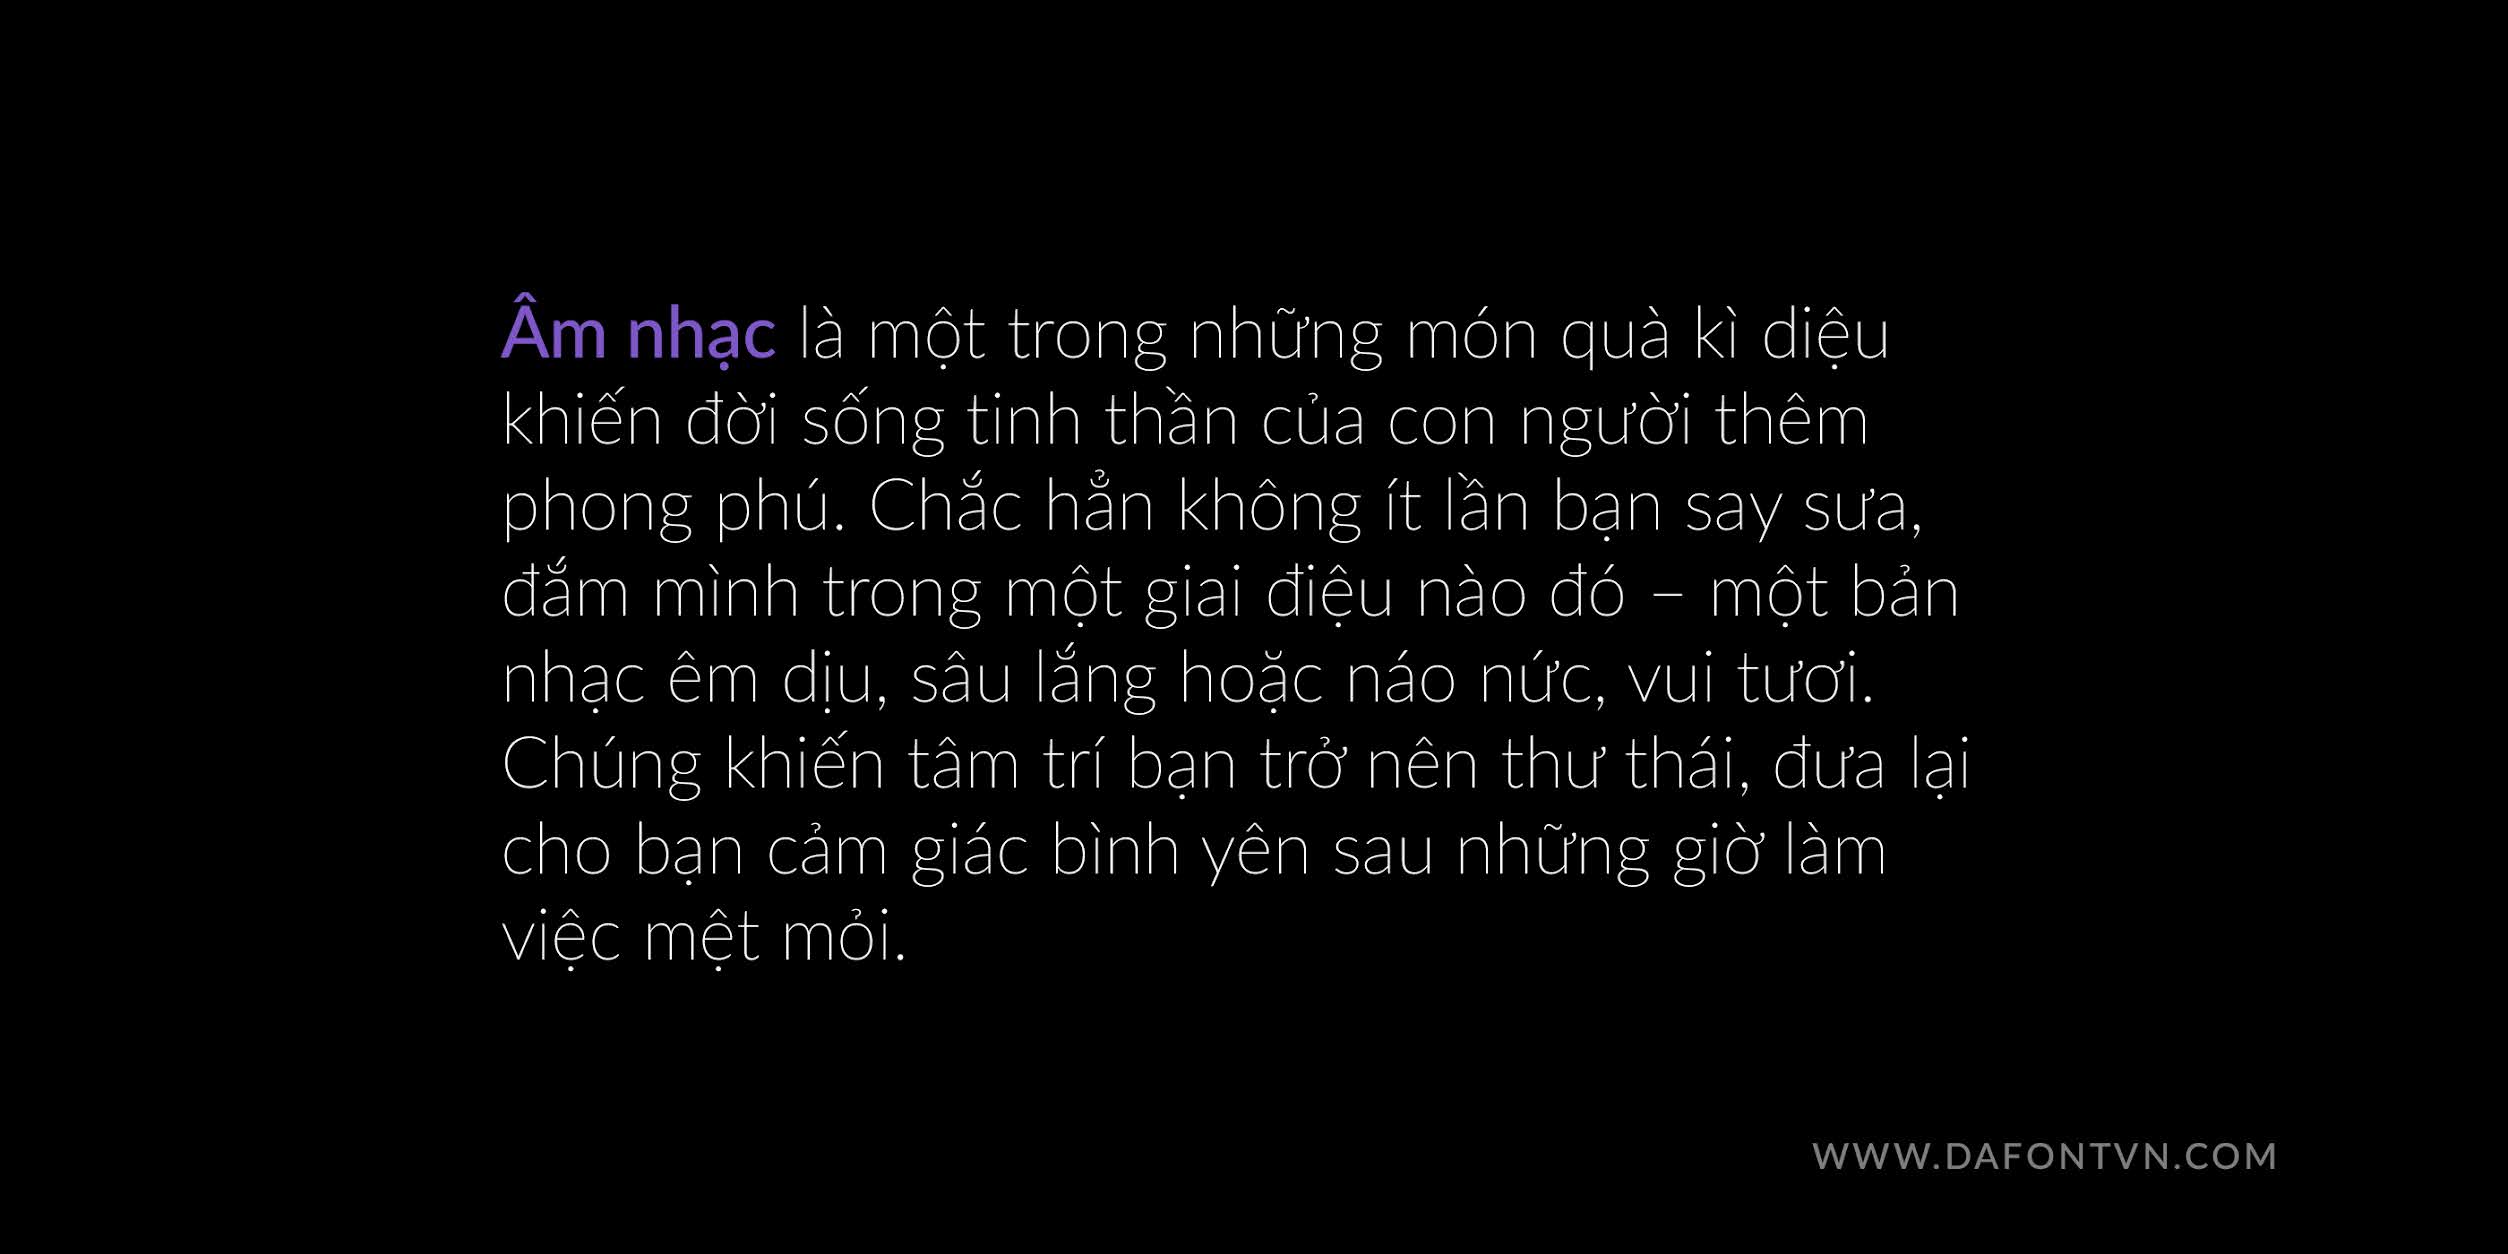 Lato - Font Việt Hóa đẹp